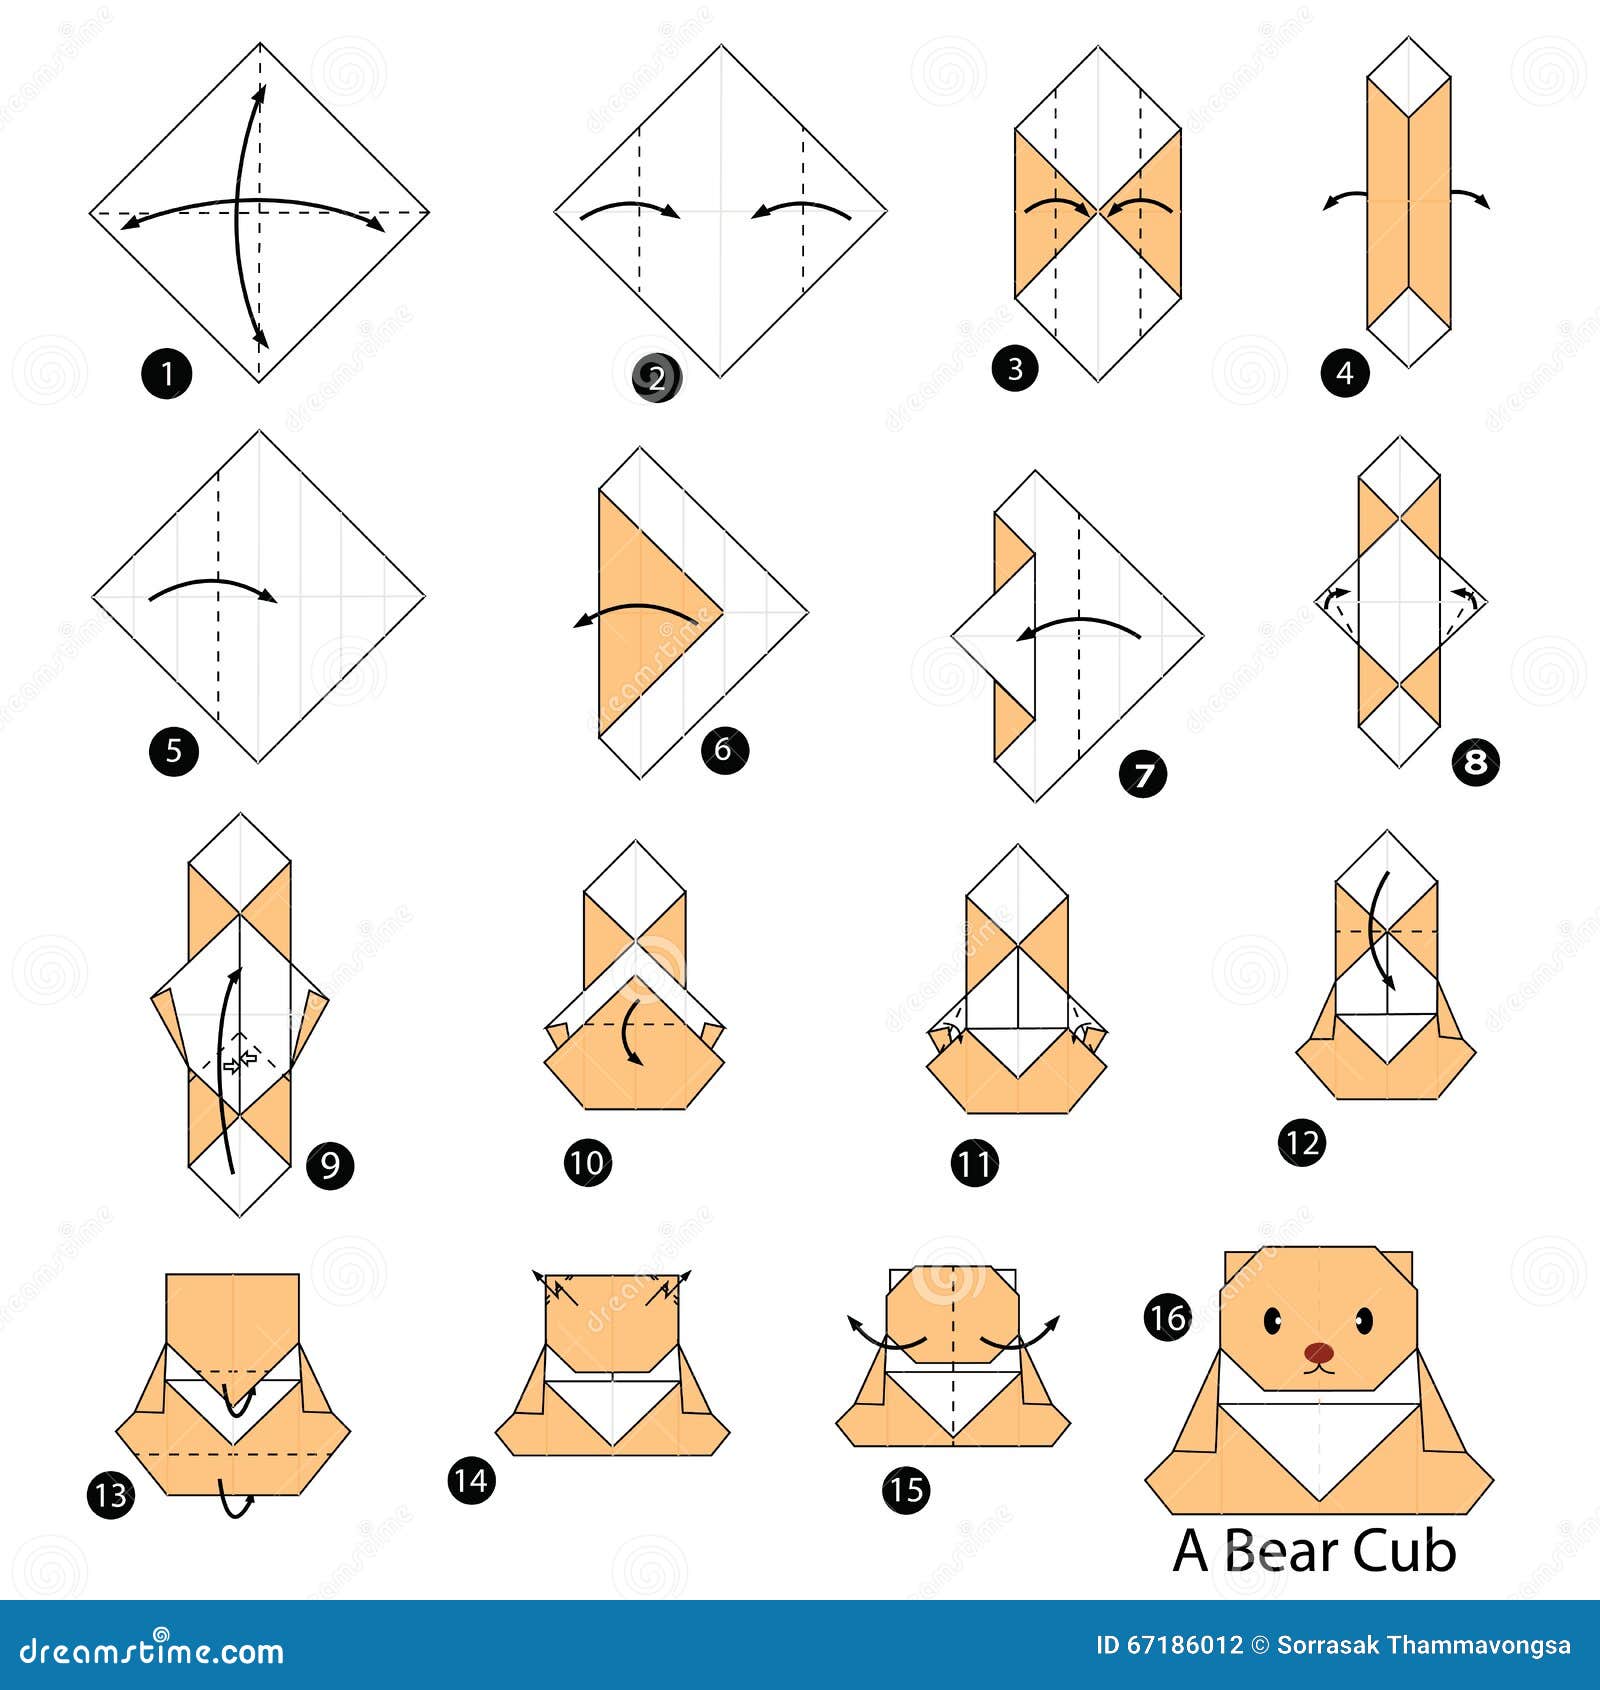 Хомячок из бумаги. Медвежонок оригами схема. Оригами медведь схема. Оригами Медвежонок из бумаги. Оригами хомяк.